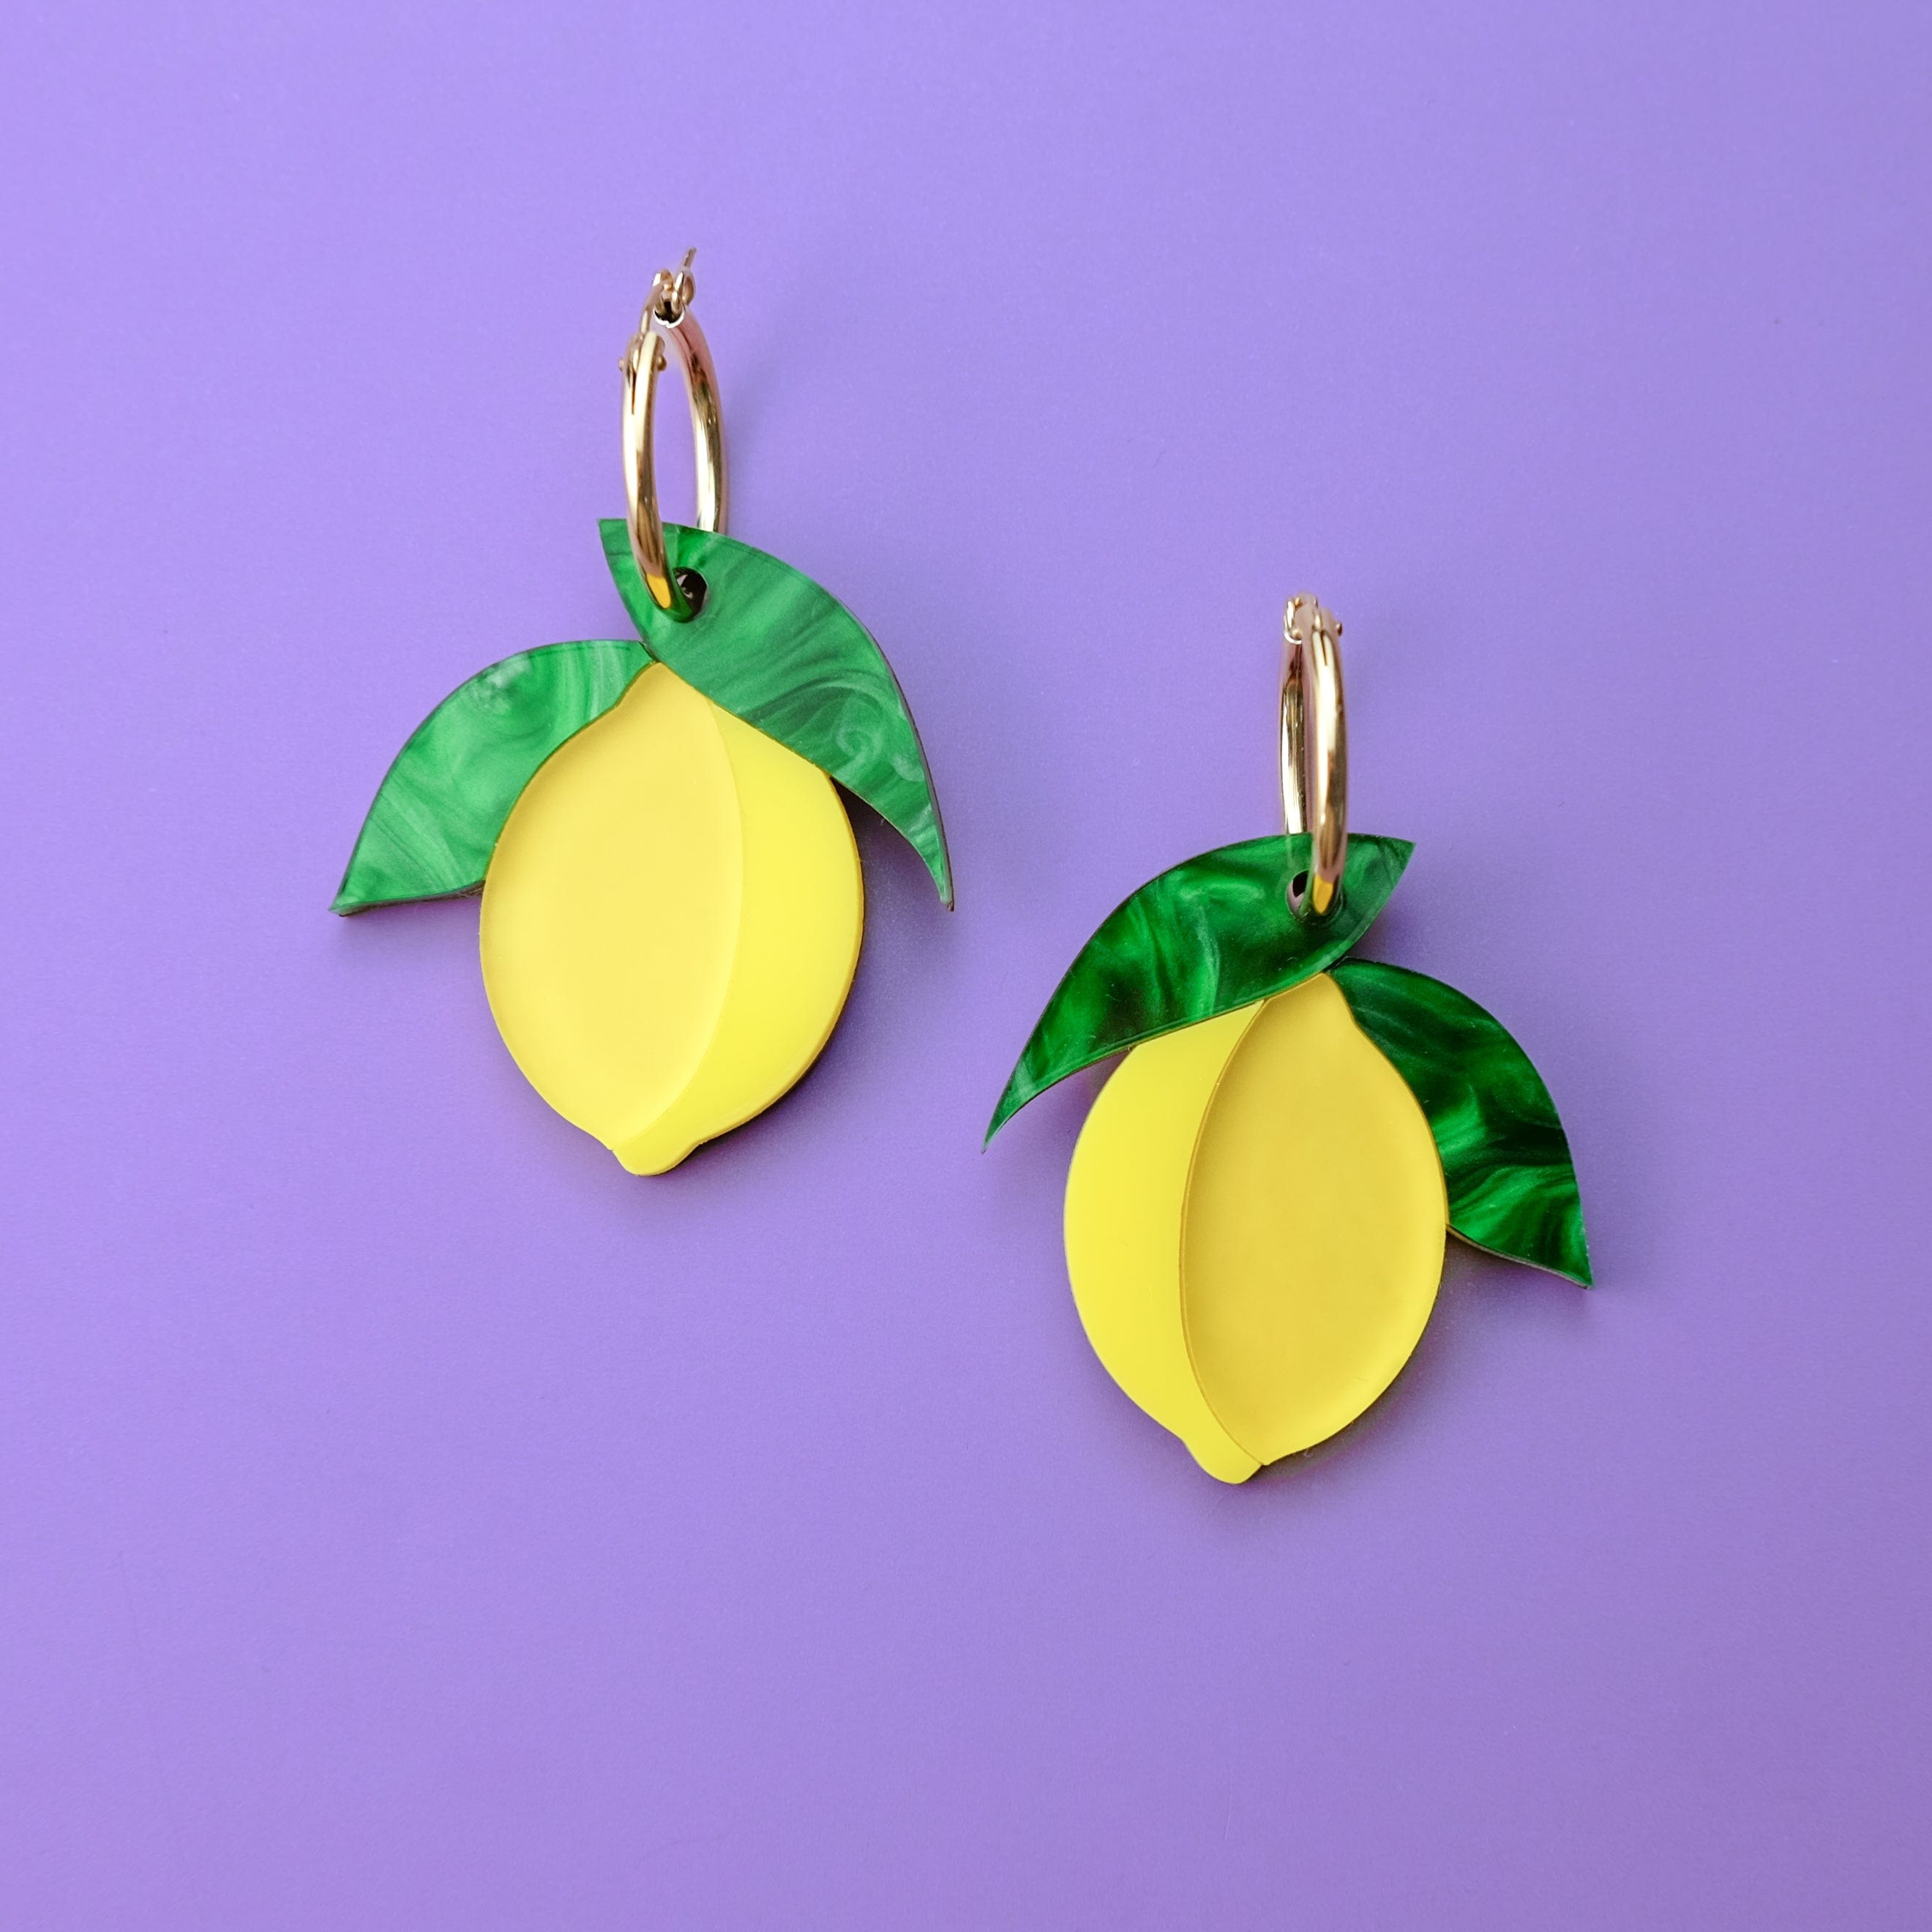 Sicilian lemon dangly earrings with gold-filled hoops